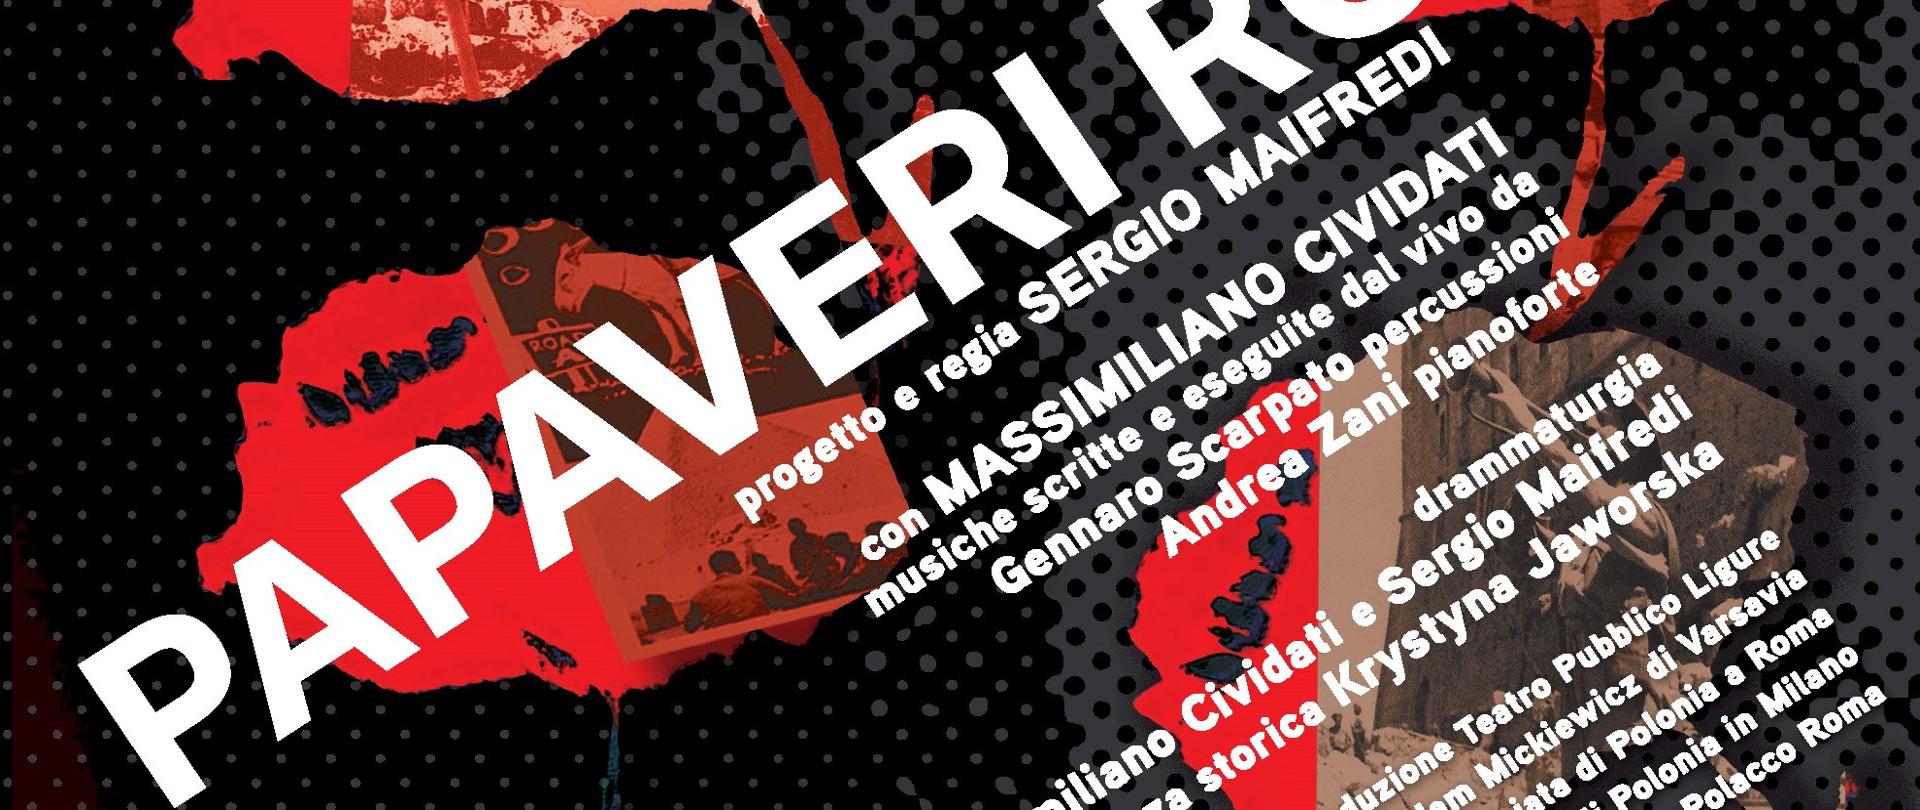 Plakat Papaveri Rossi a Milano